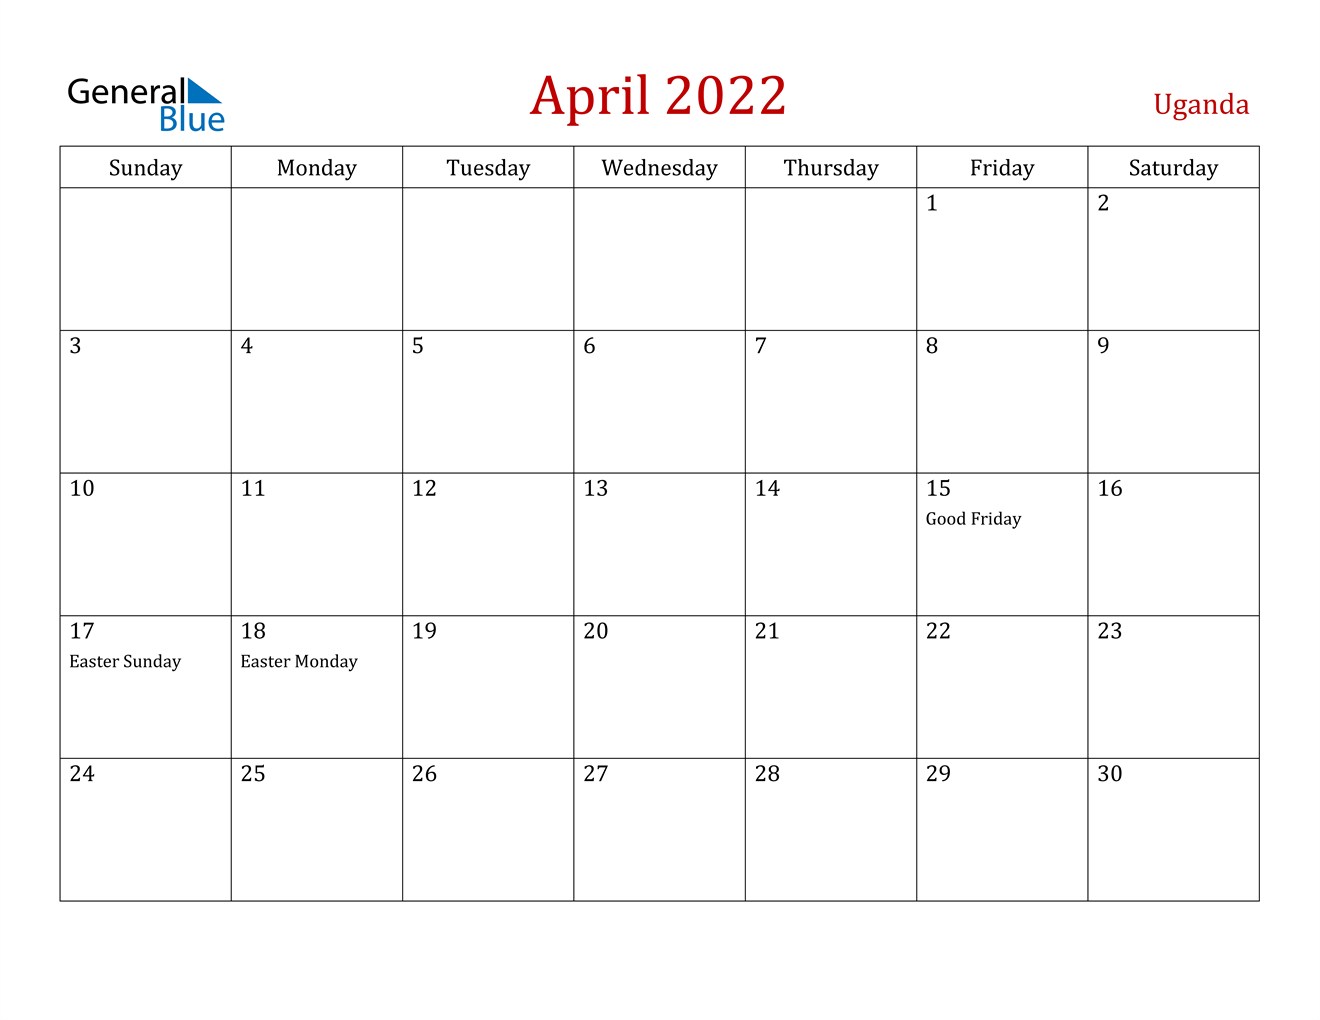 April 2022 Calendar - Uganda